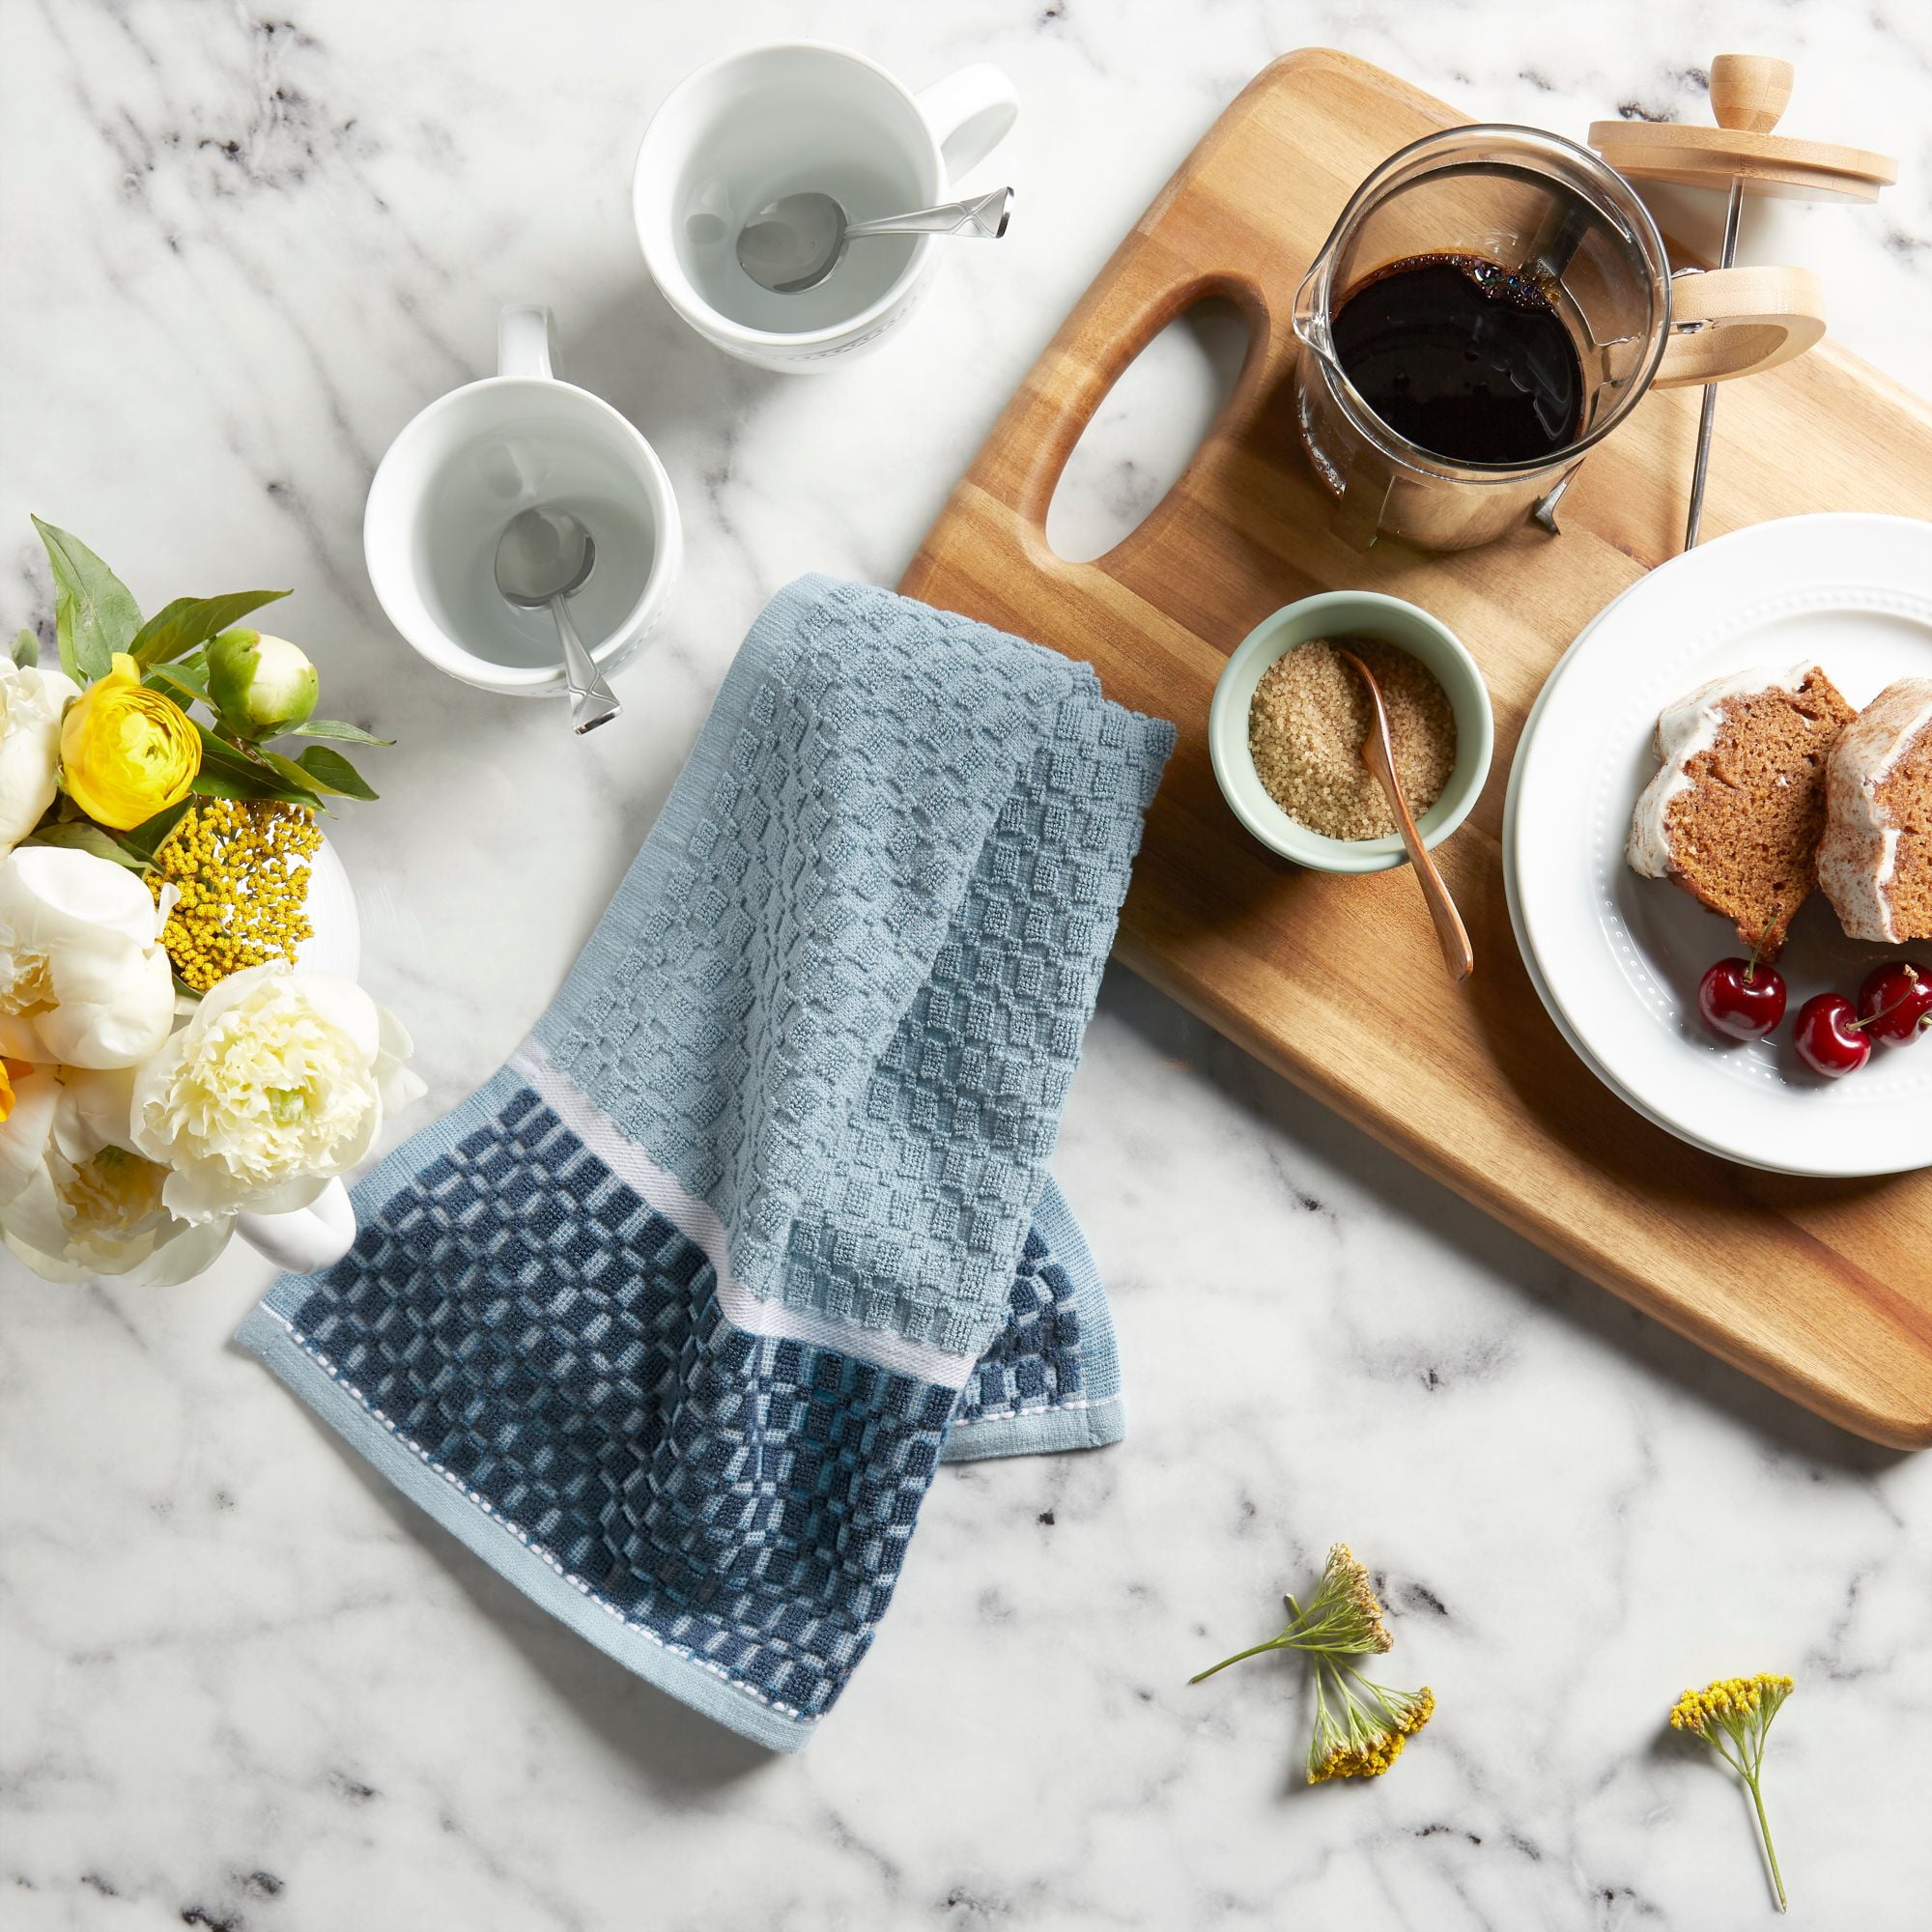 5pk Microfiber Waffle Kitchen Towel And Dish Cloth Set Sea Blue - MU Kitchen